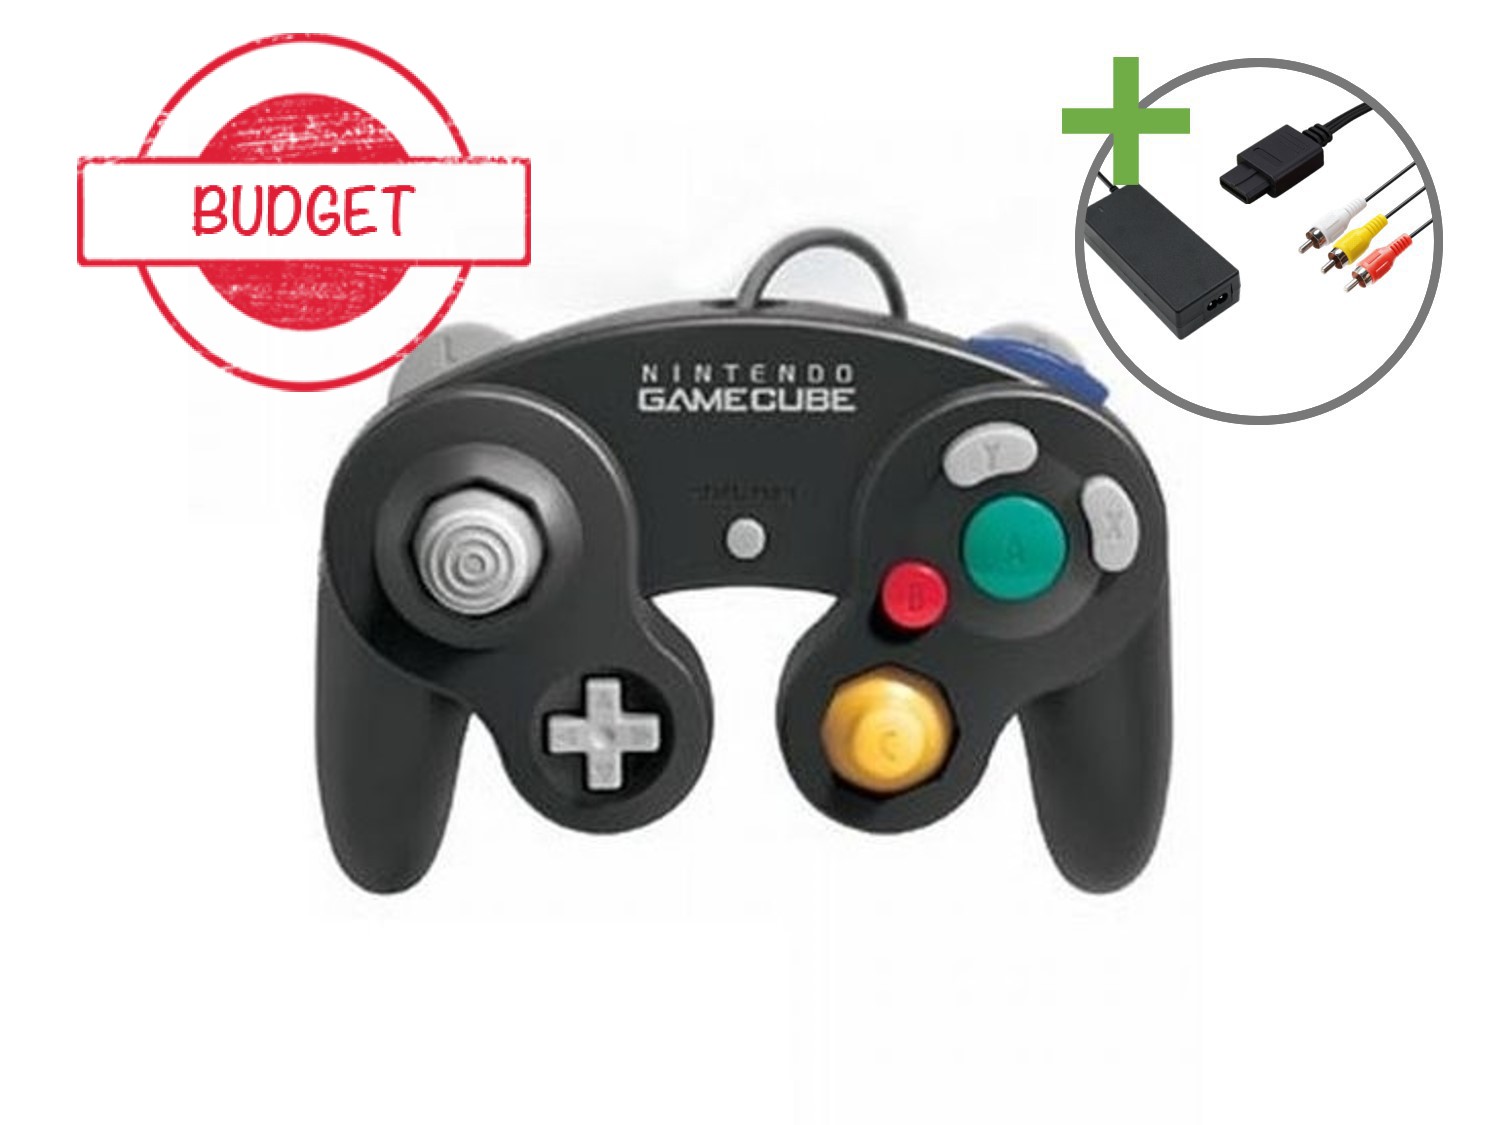 Nintendo Gamecube Starter Pack - Black Edition - Budget - Gamecube Hardware - 2